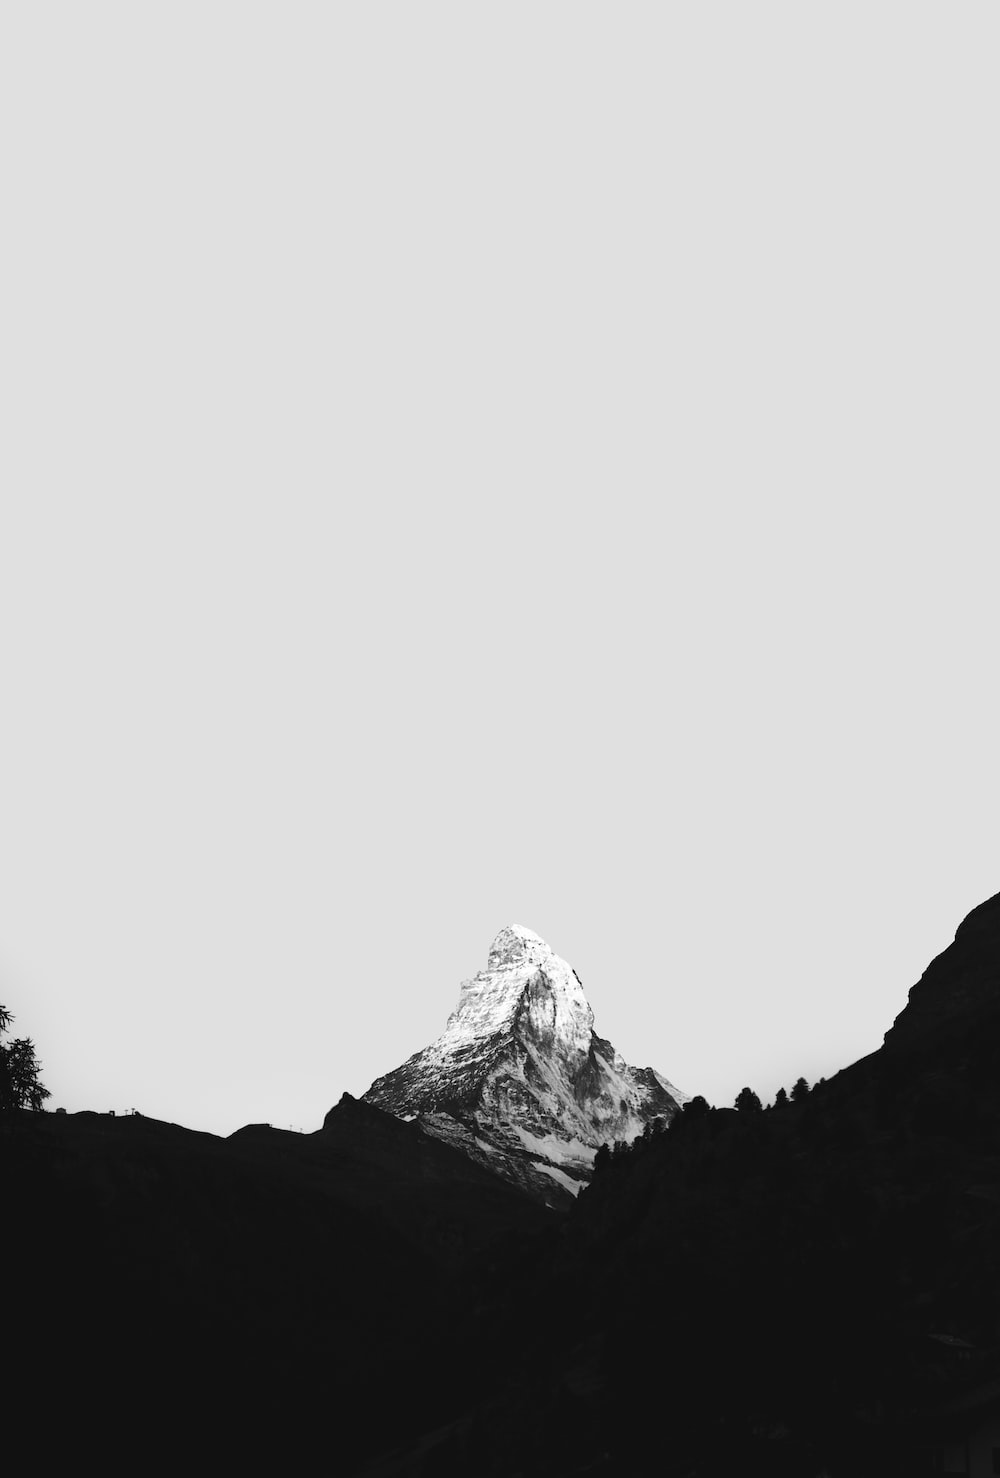 Minimal Mountain Picture. Download Free Image